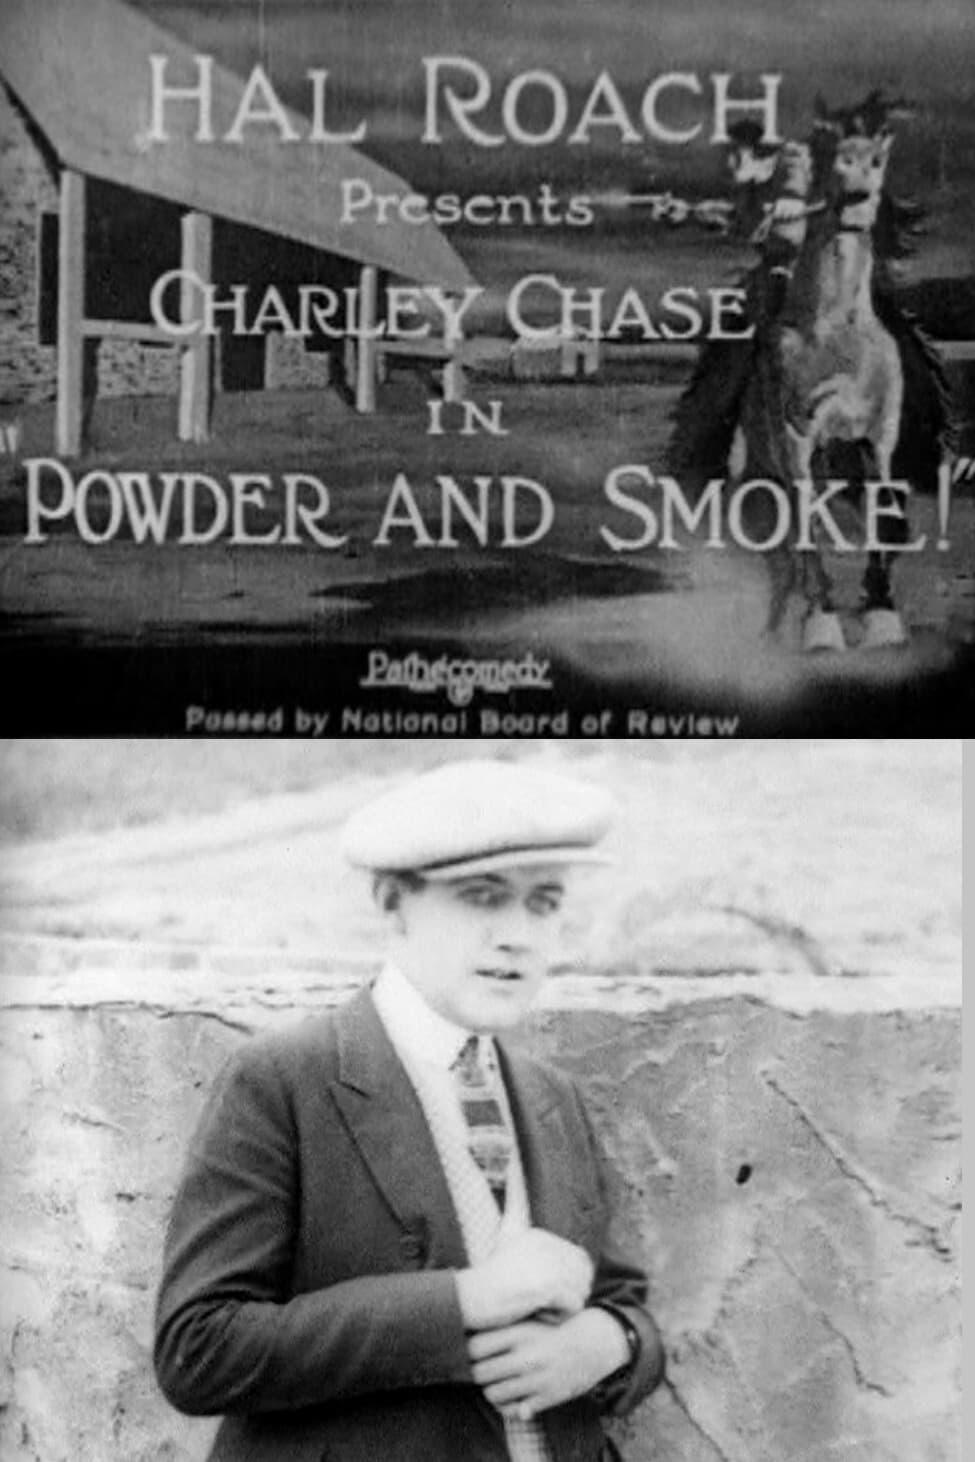 Powder and Smoke poster